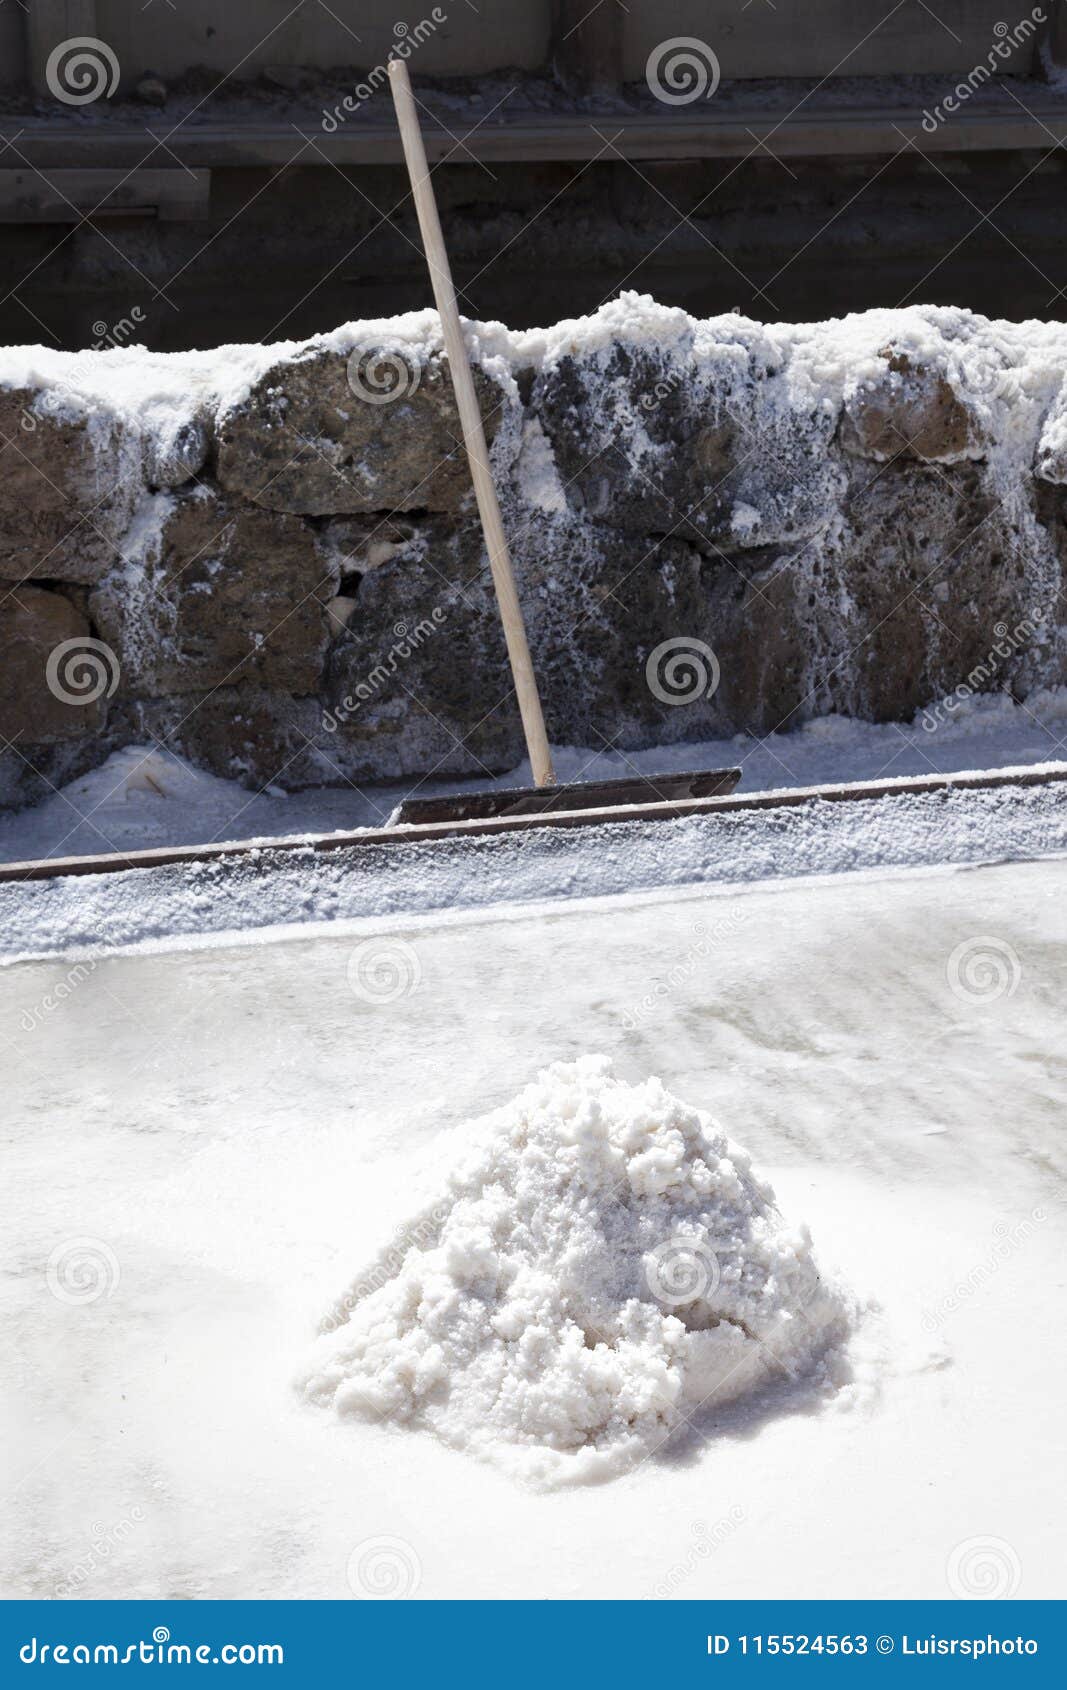 salt collected in salt pans